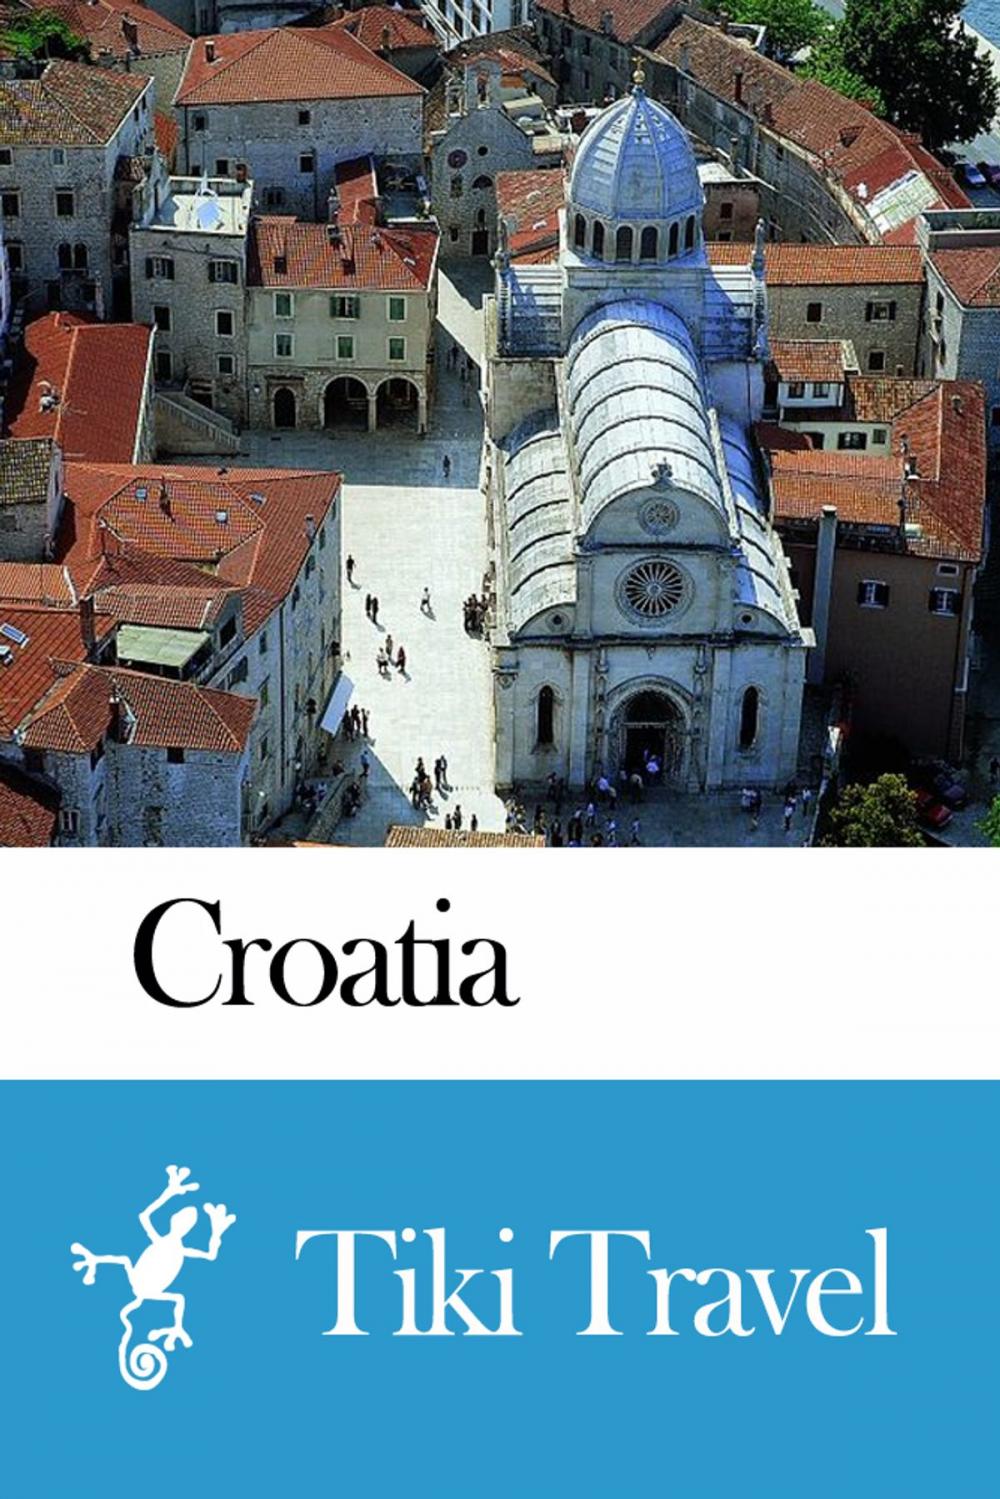 Big bigCover of Croatia Travel Guide - Tiki Travel